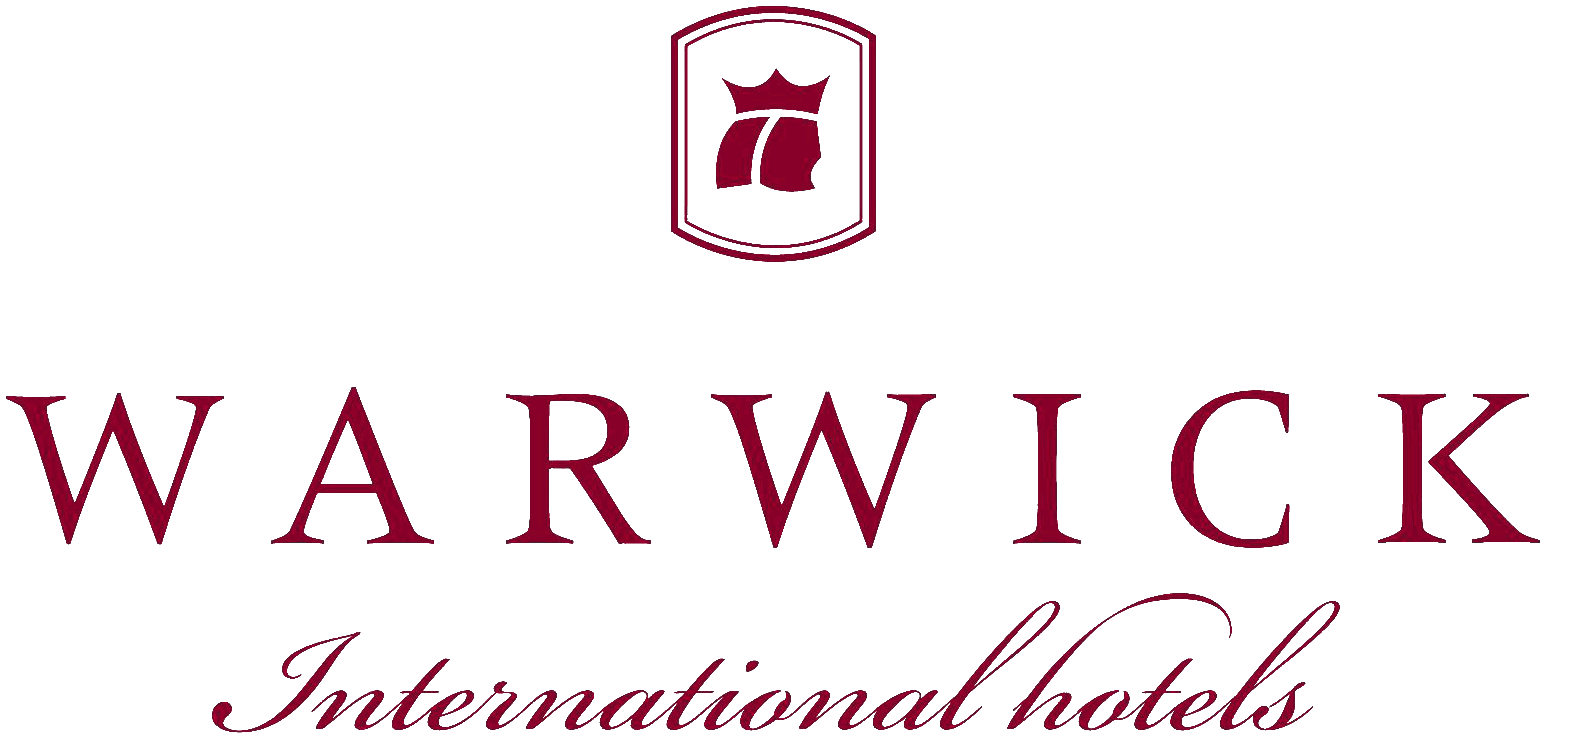 Hotels International Logo - Warwick Hotels & Resorts